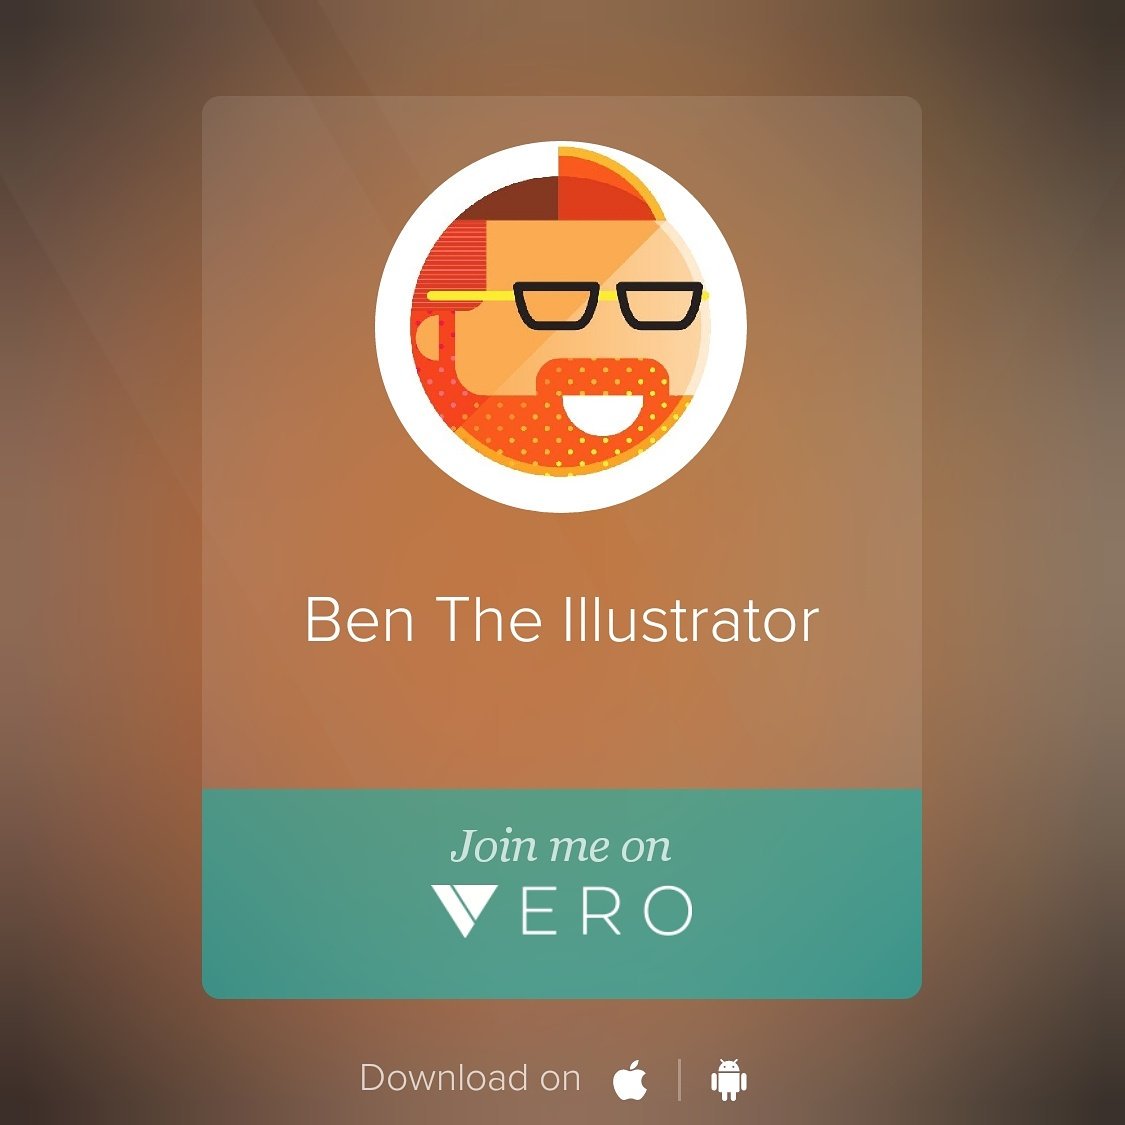 Ben the Illustrator